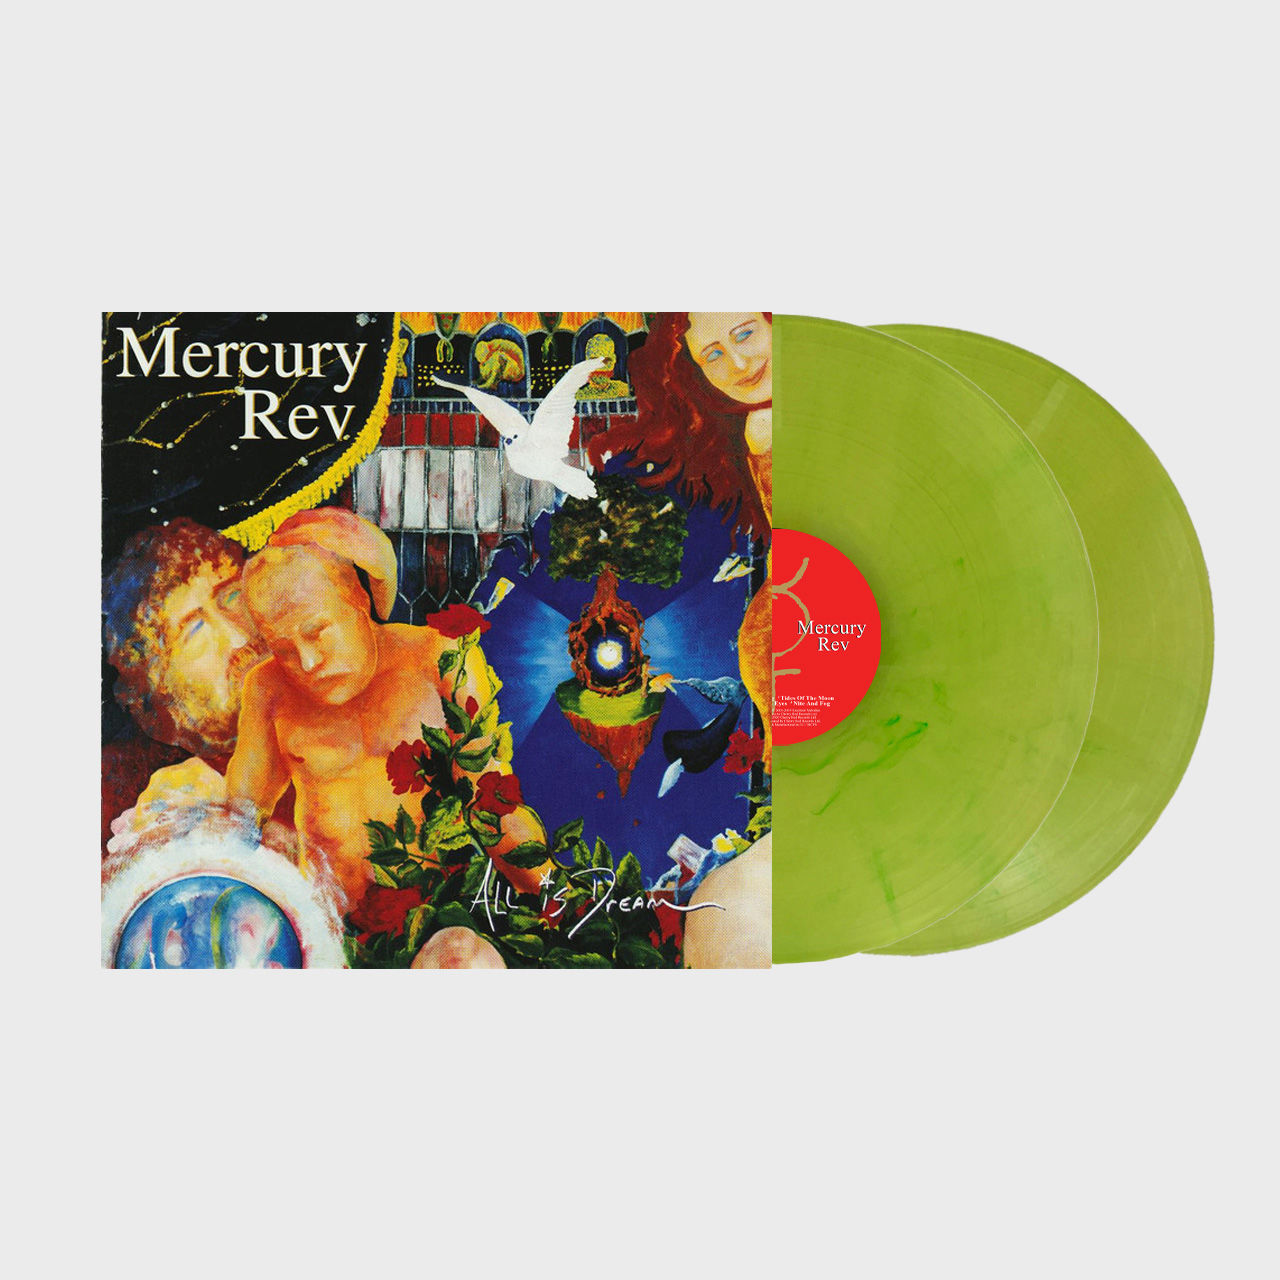 Mercury Rev - All Is Dream: Limited Yellow + Green Marble Vinyl 2LP